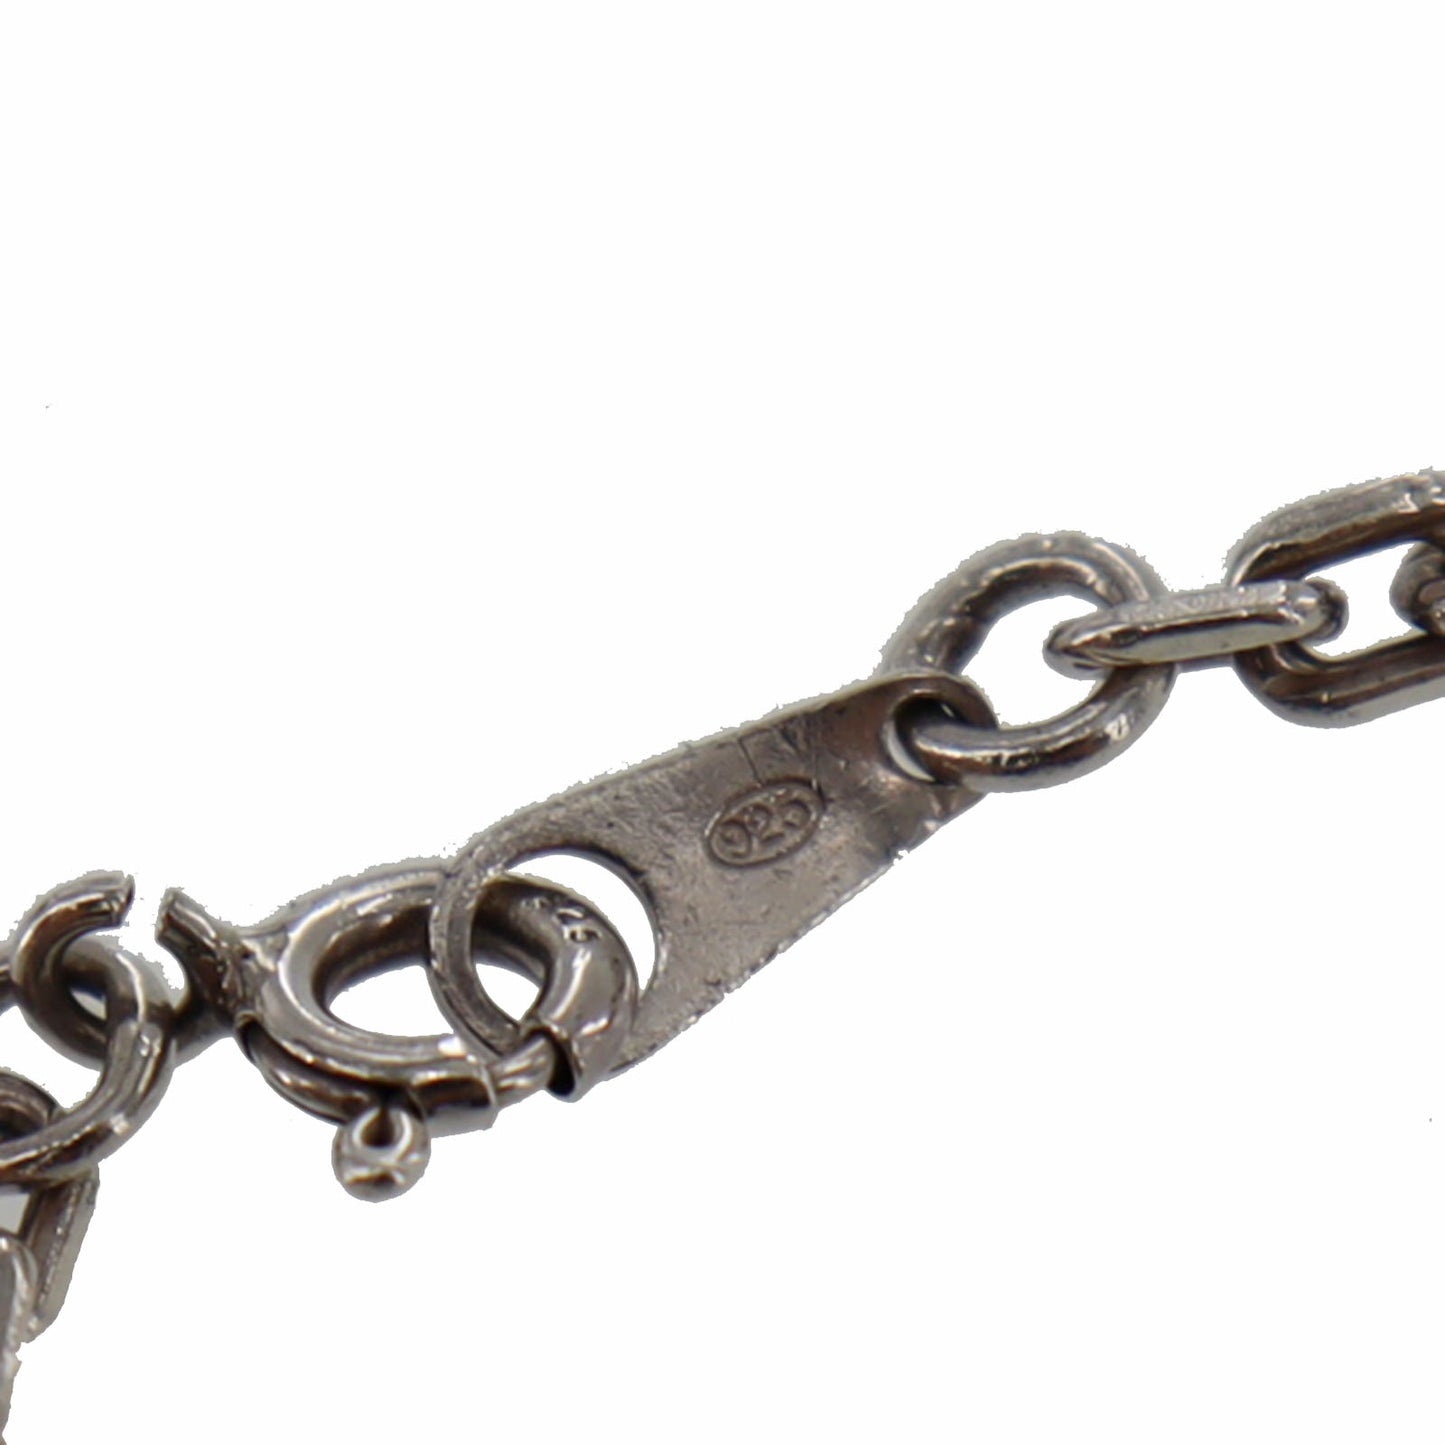 Chrome Hearts Dagger Pendant Necklace Charm Silver 925 #AG313